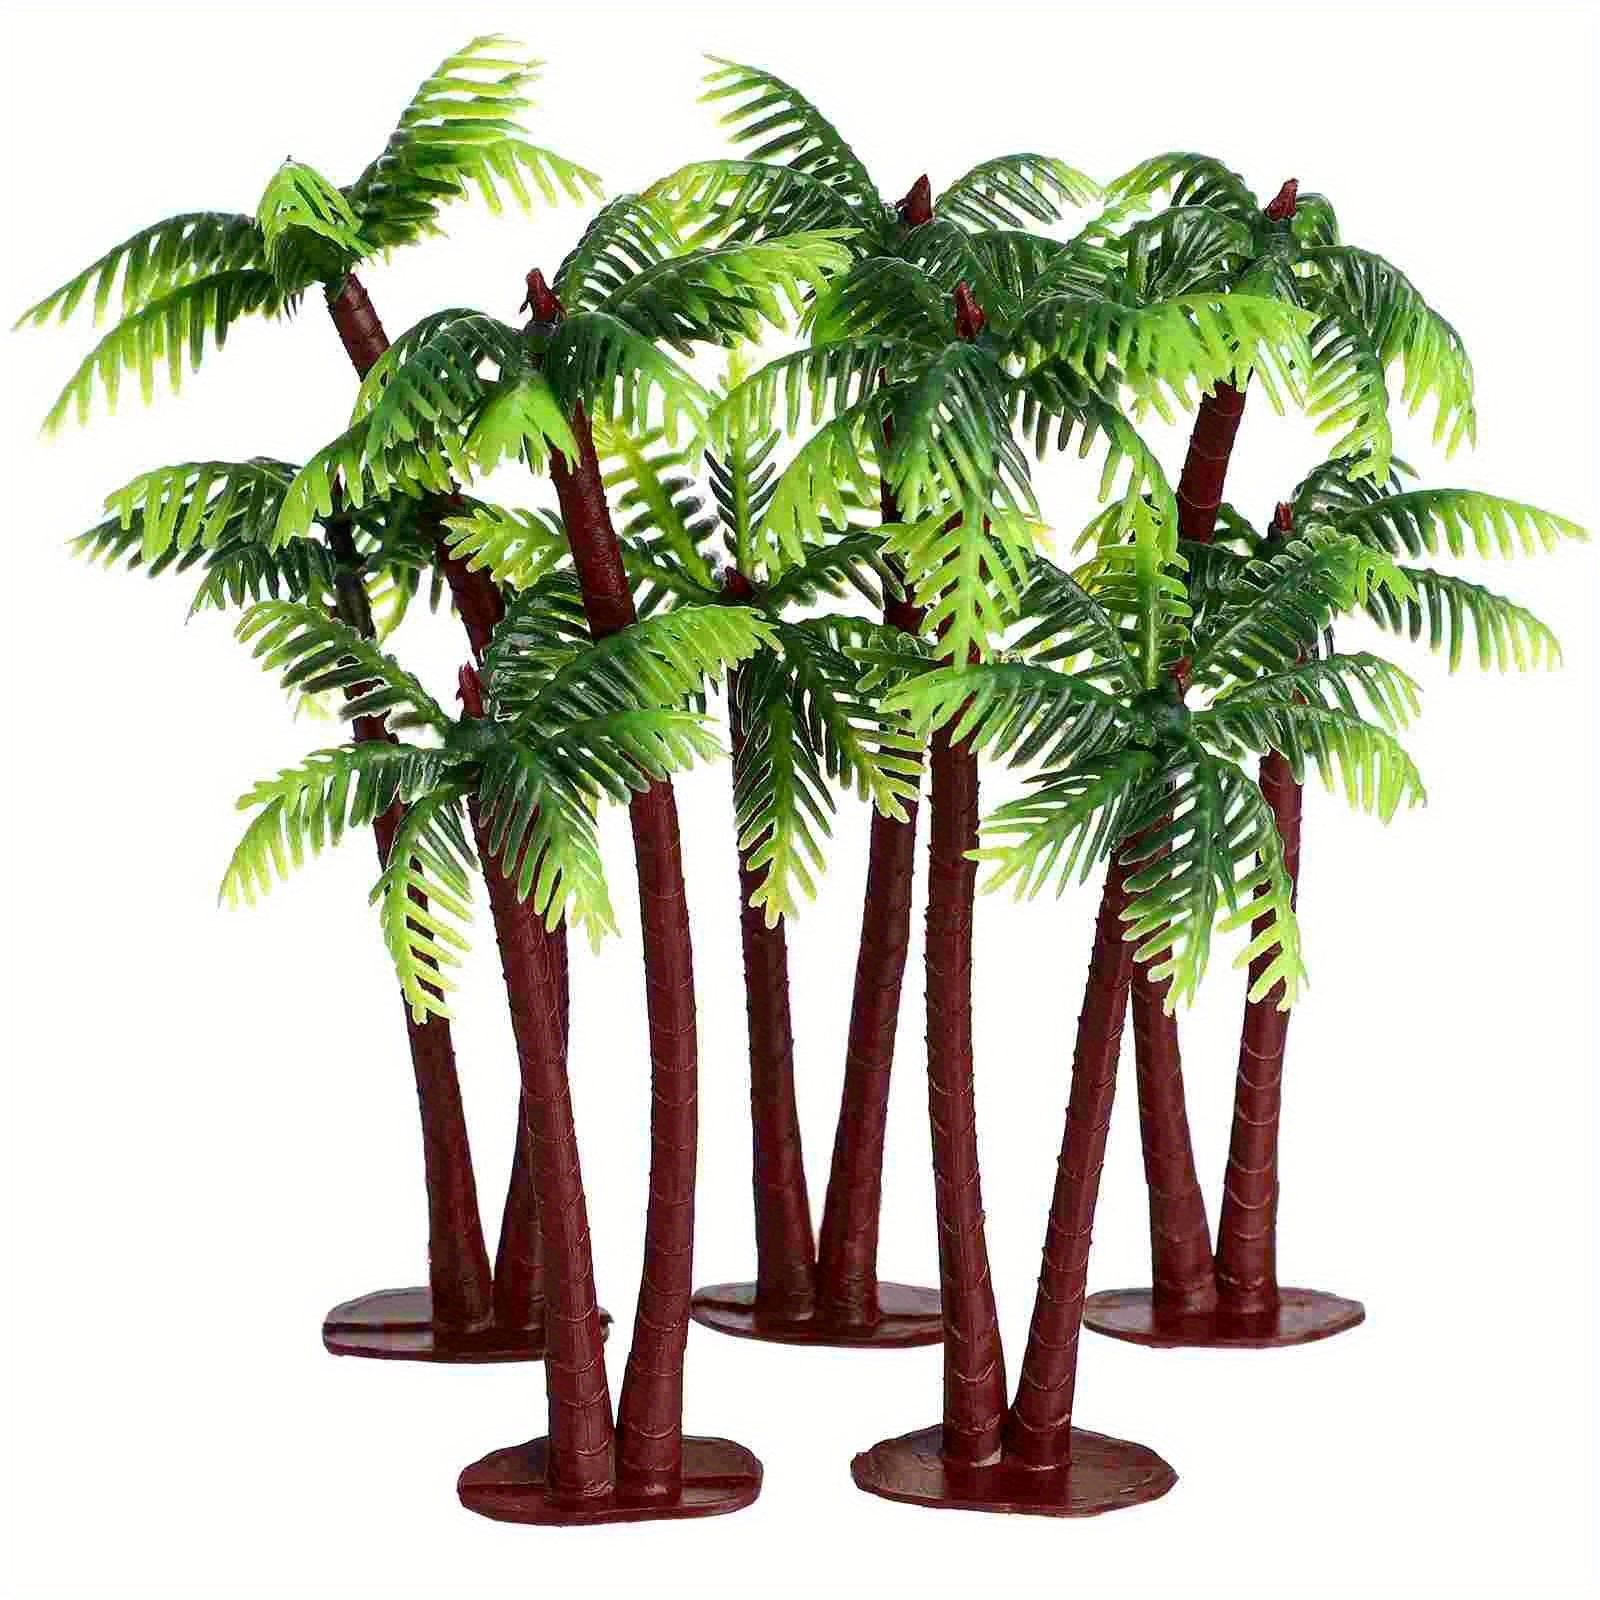 

5-pack Miniature Coconut Tree Decorations For Aquariums - Lifelike Pvc Palm Trees, Sturdy Base, Ideal For Fish Tanks & Terrariums